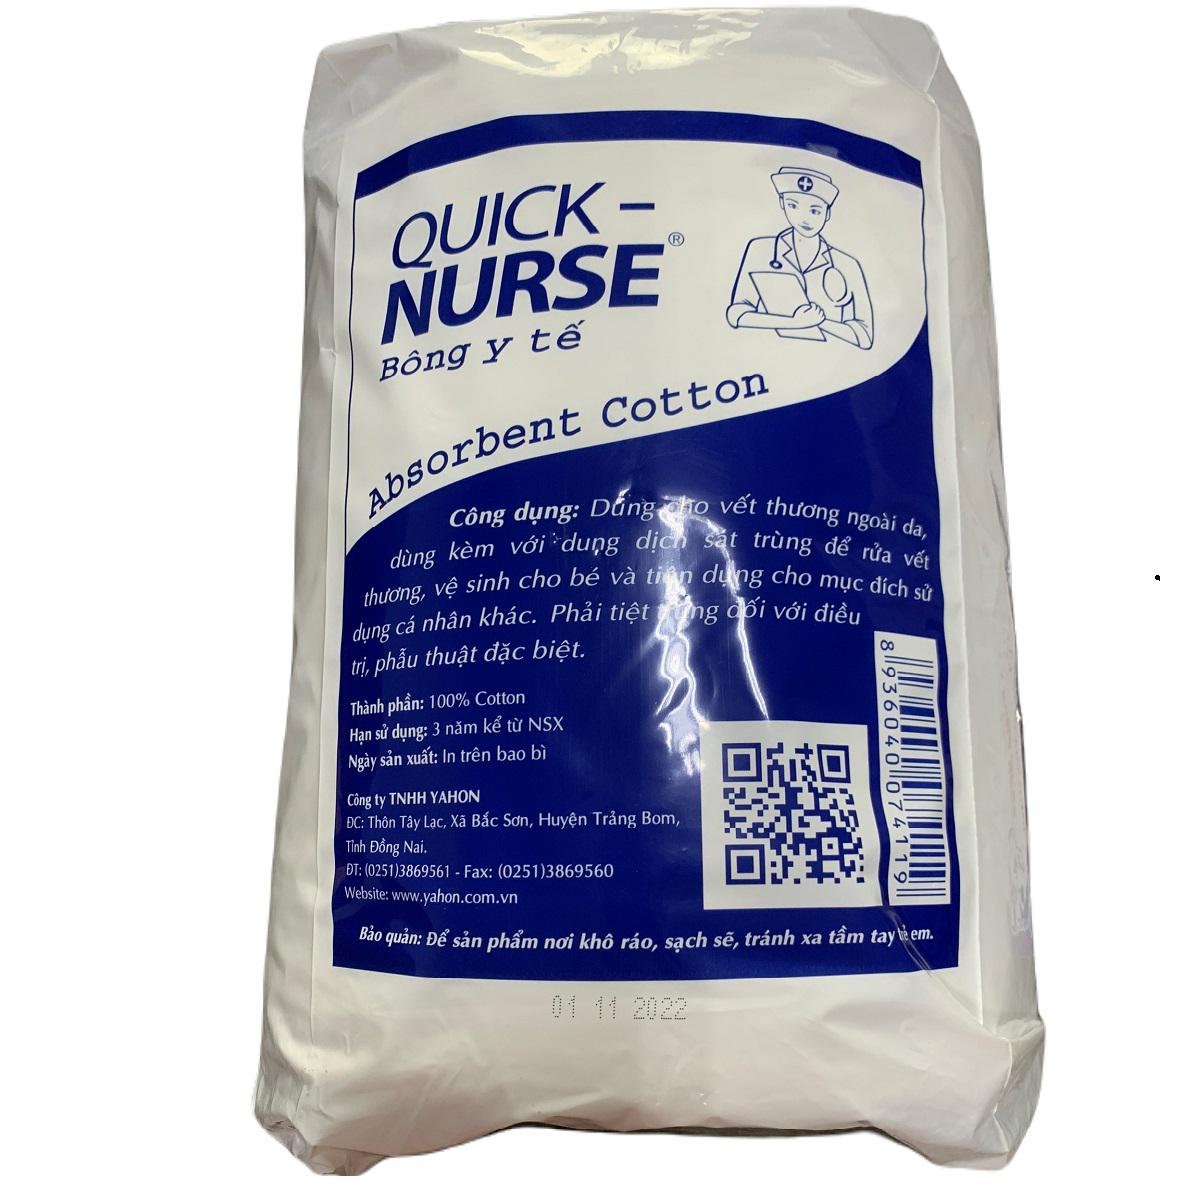 Bông Y Tế Quick Nurse (Bịch/1kg)